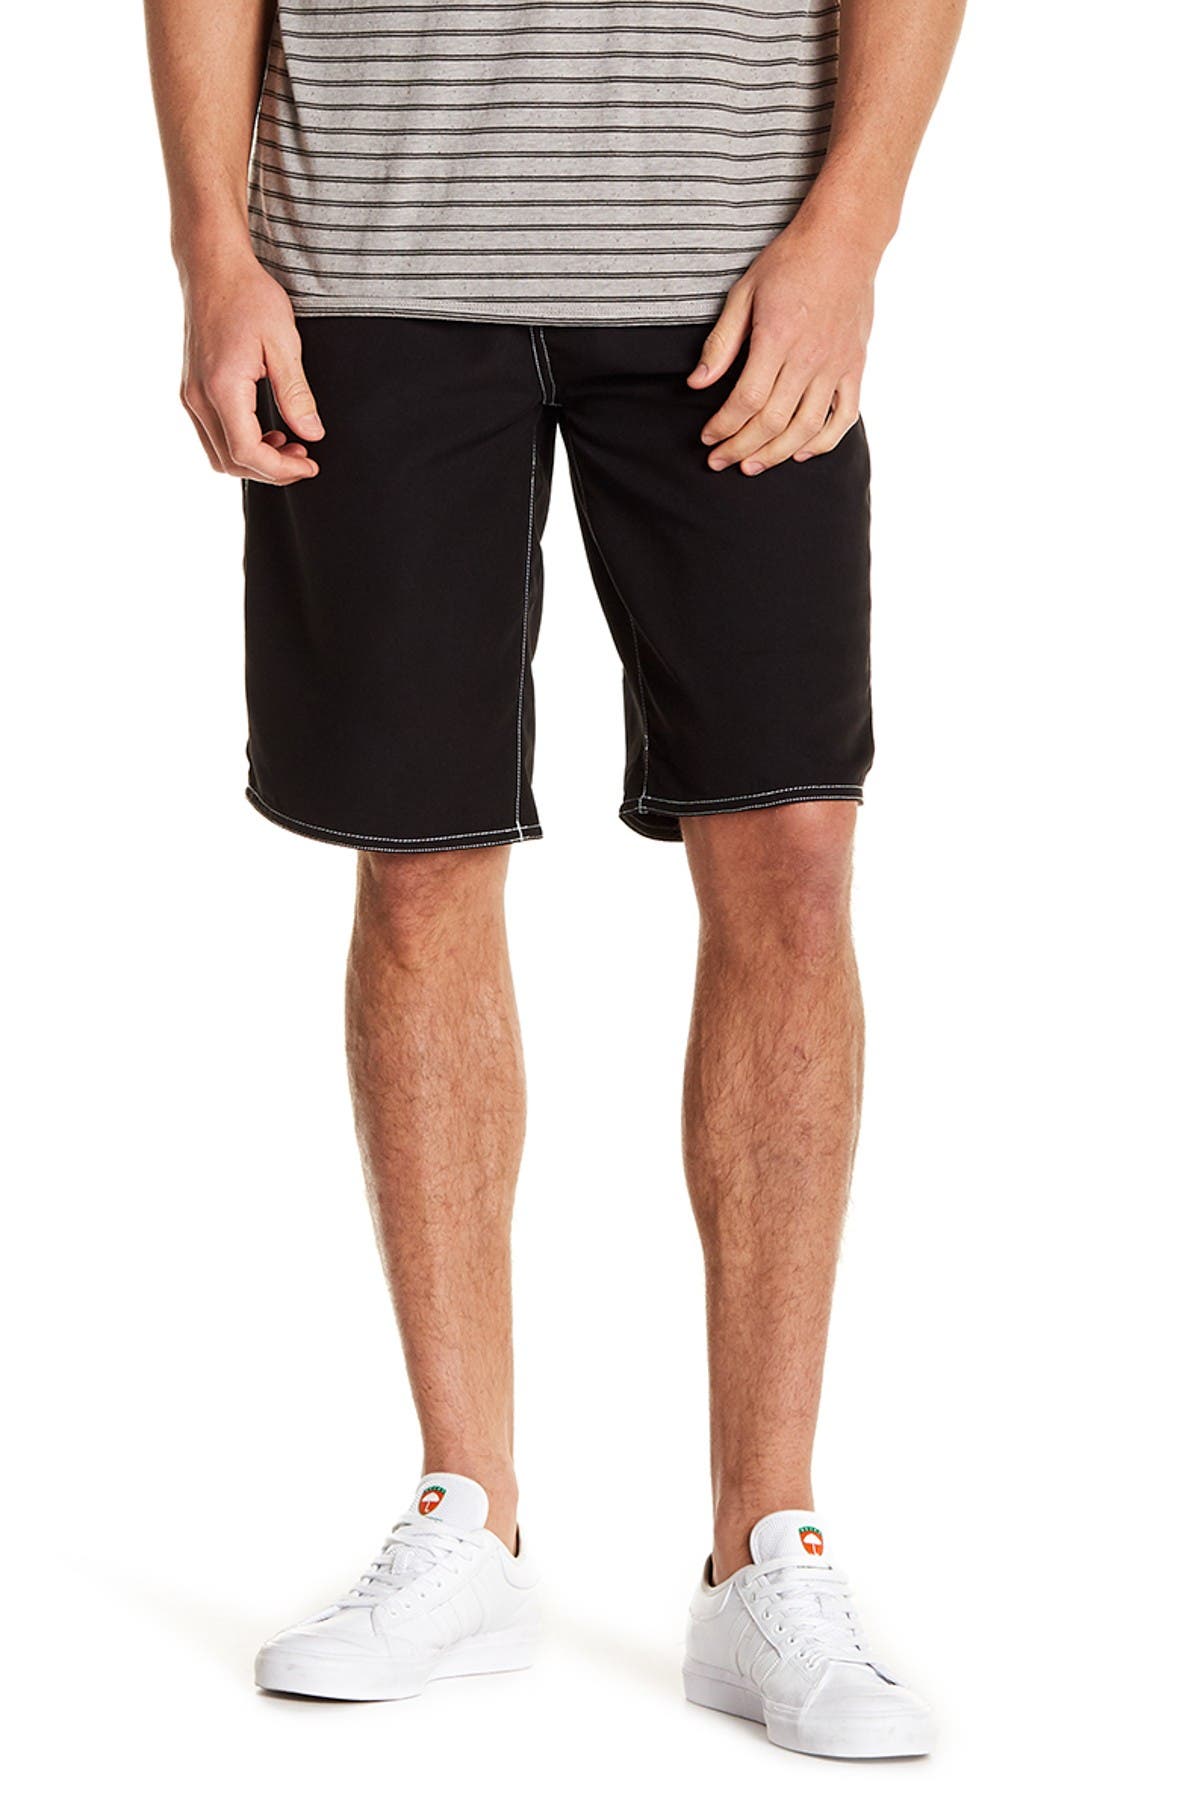 true religion board shorts